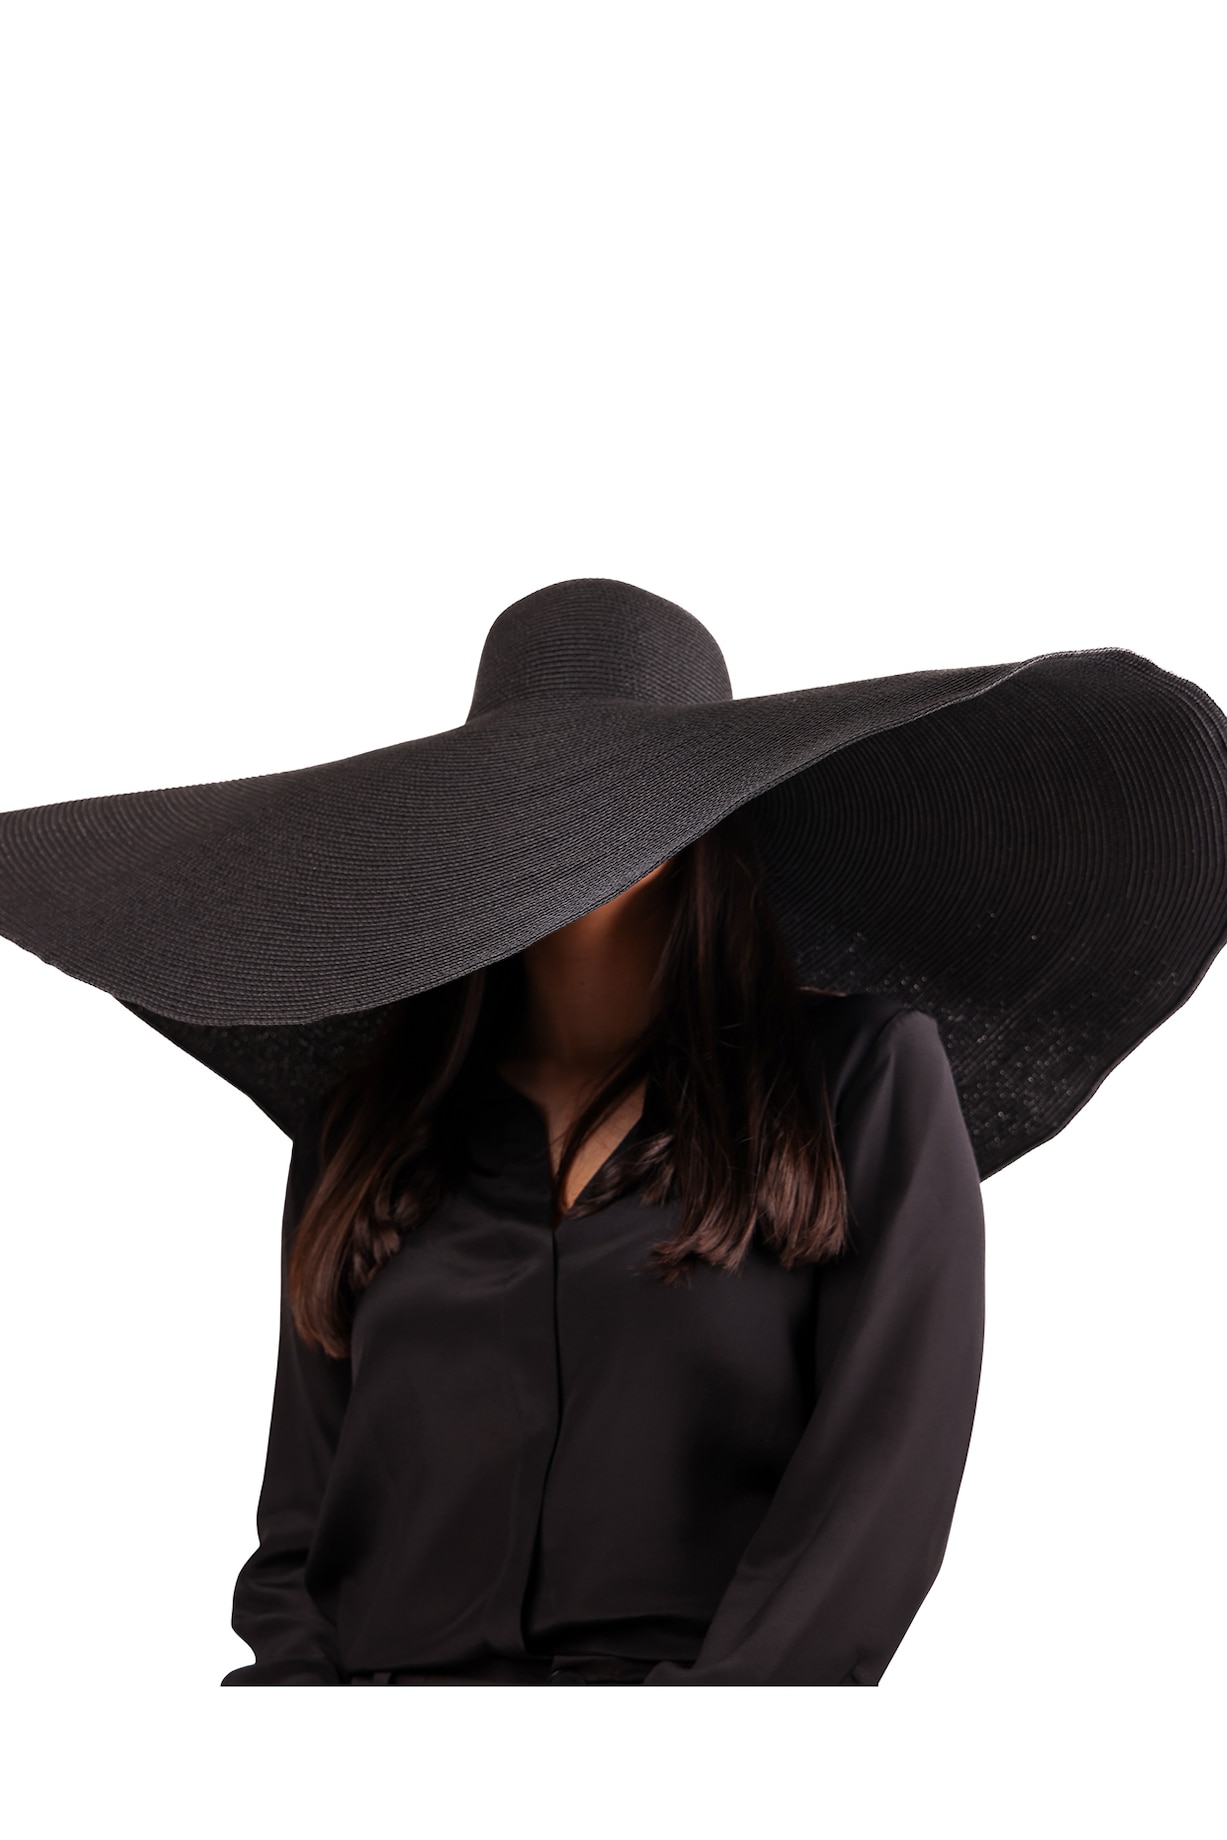 Jute Hat for Men Women with Wide Brim, Stylish Sun Algeria